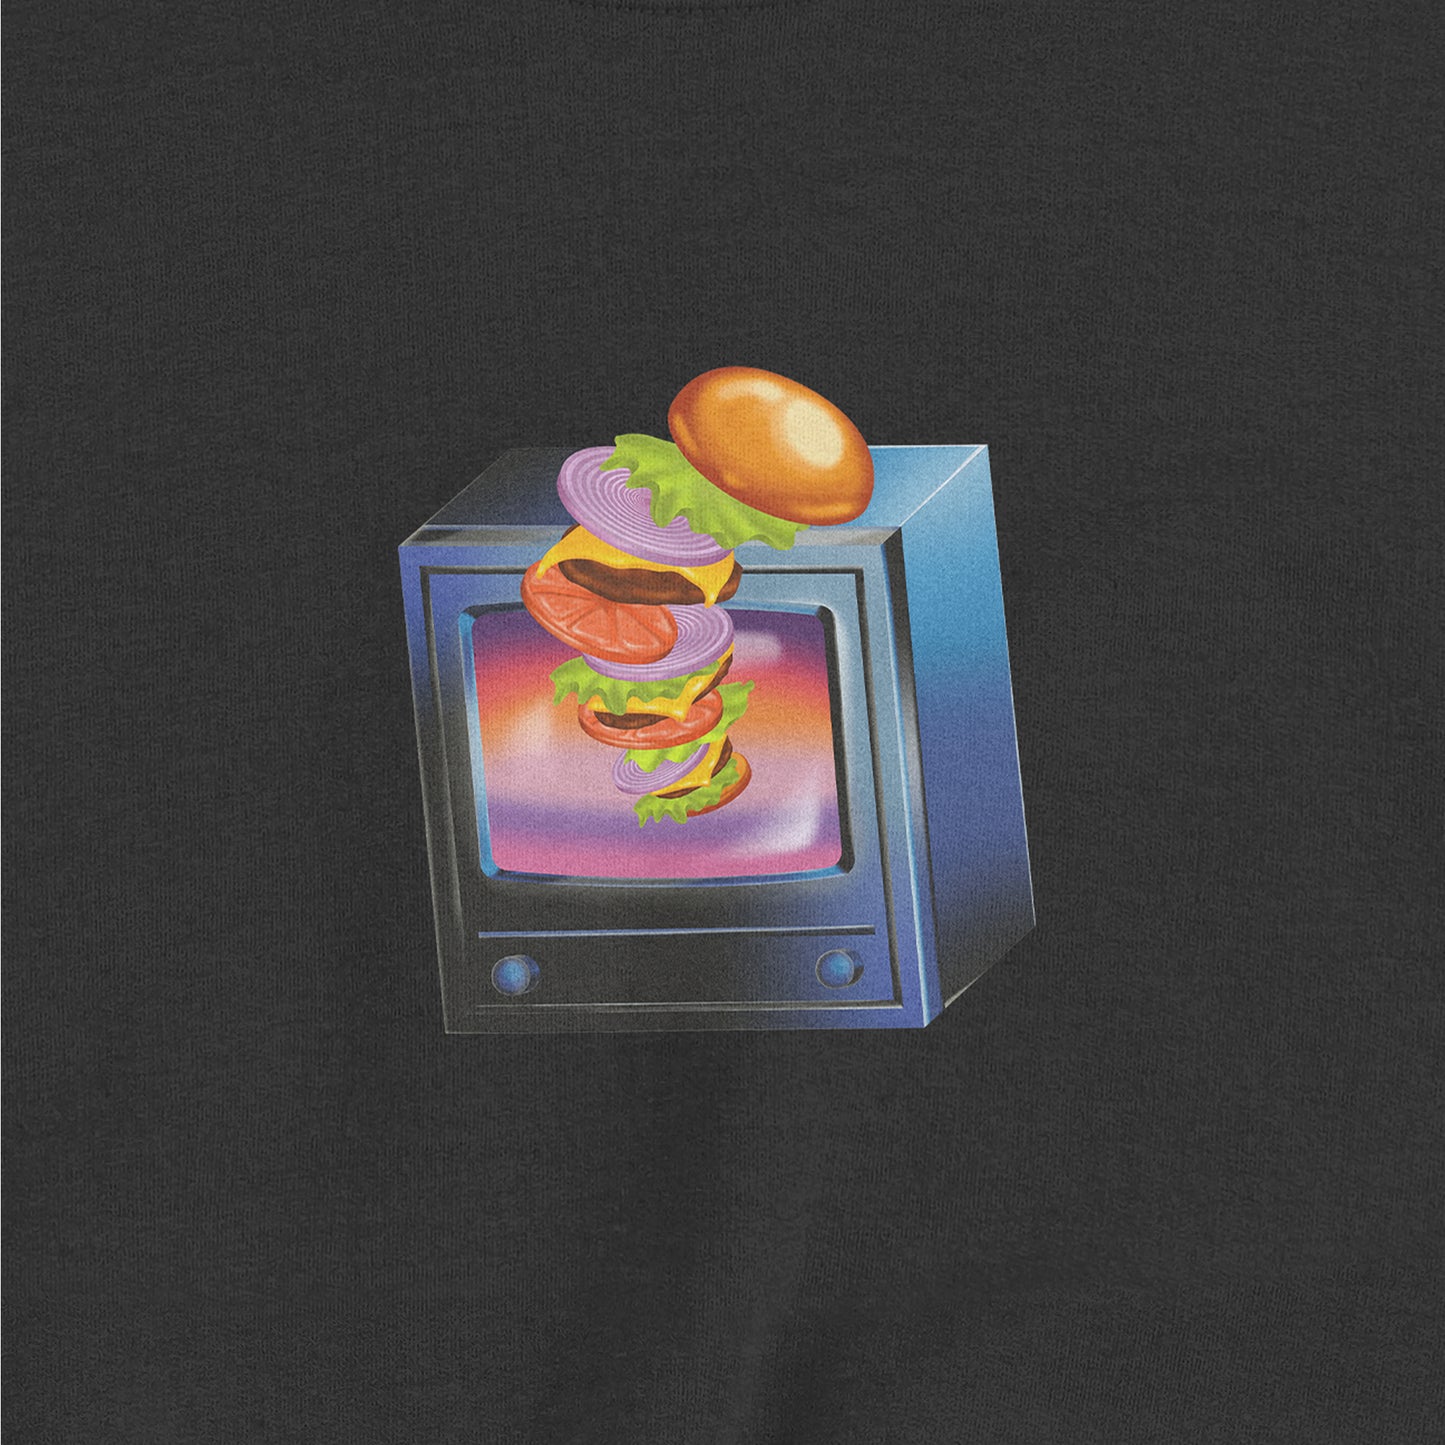 Burger TV Sweatshirt